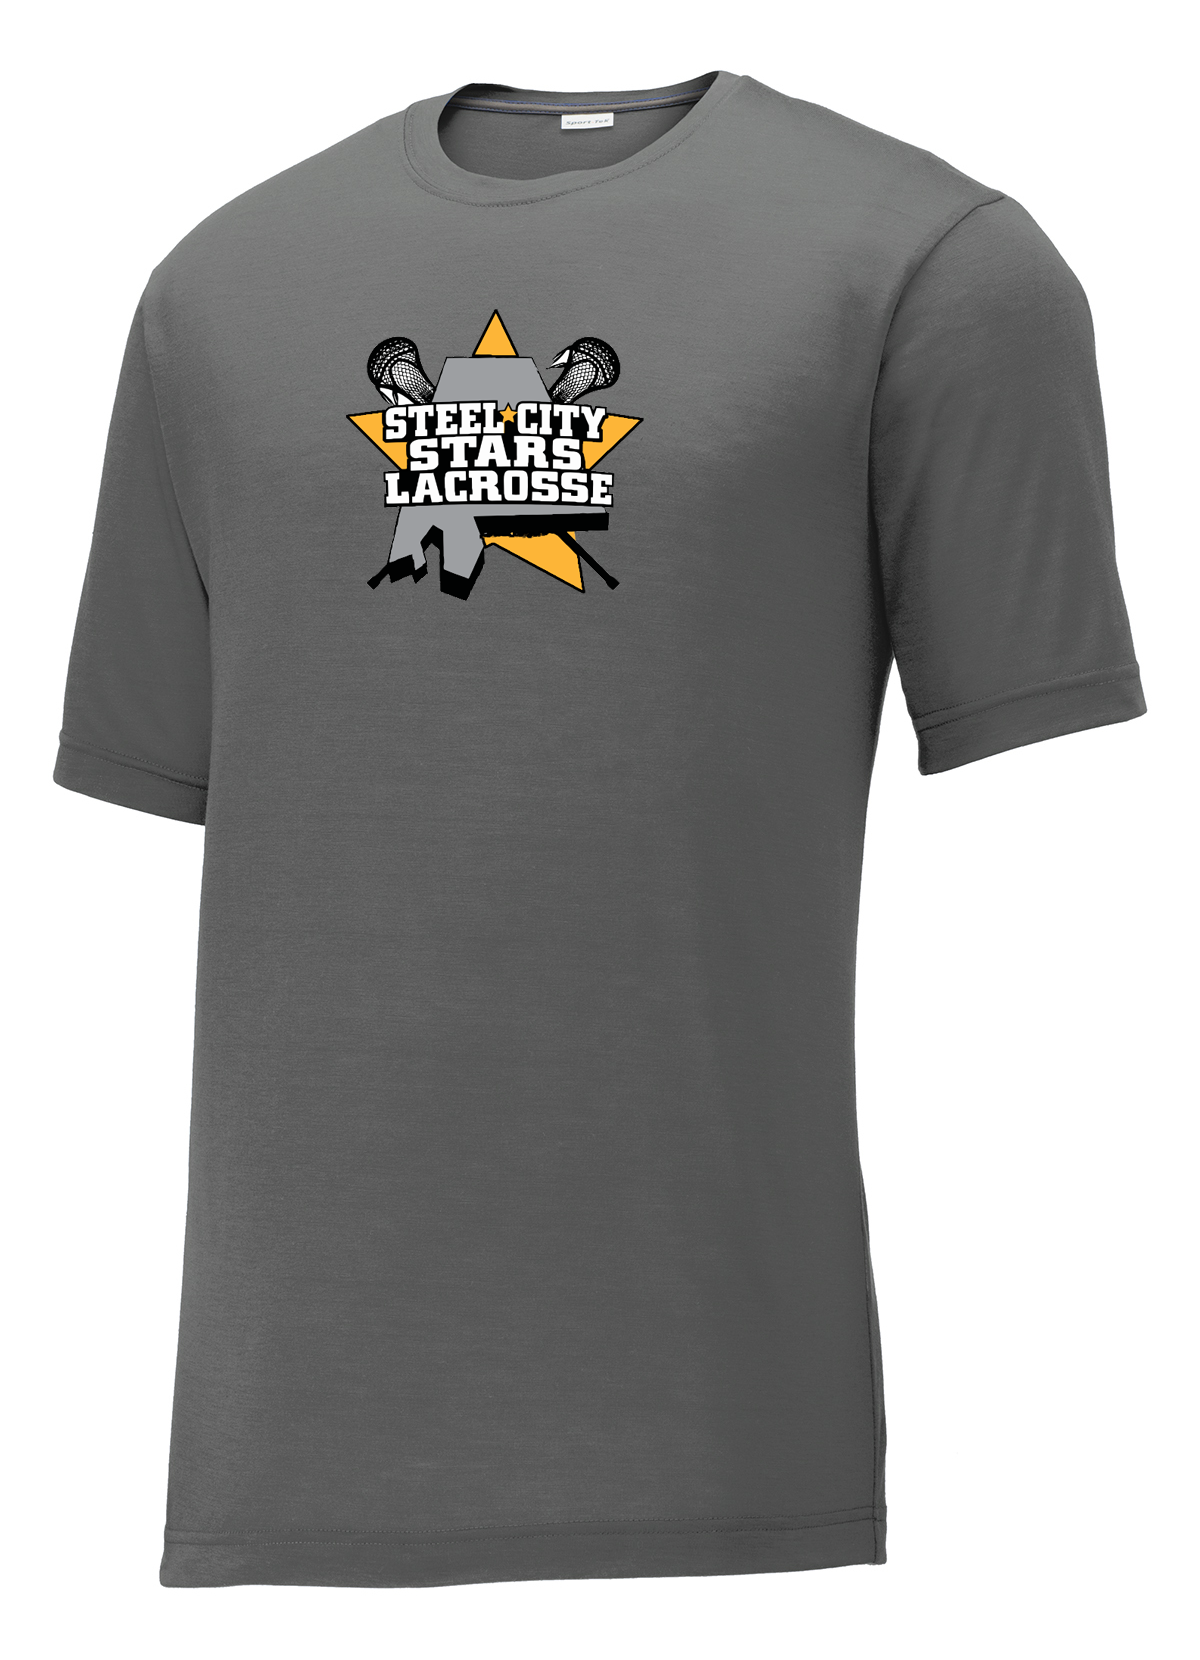 Stars Lacrosse CottonTouch Performance T-Shirt